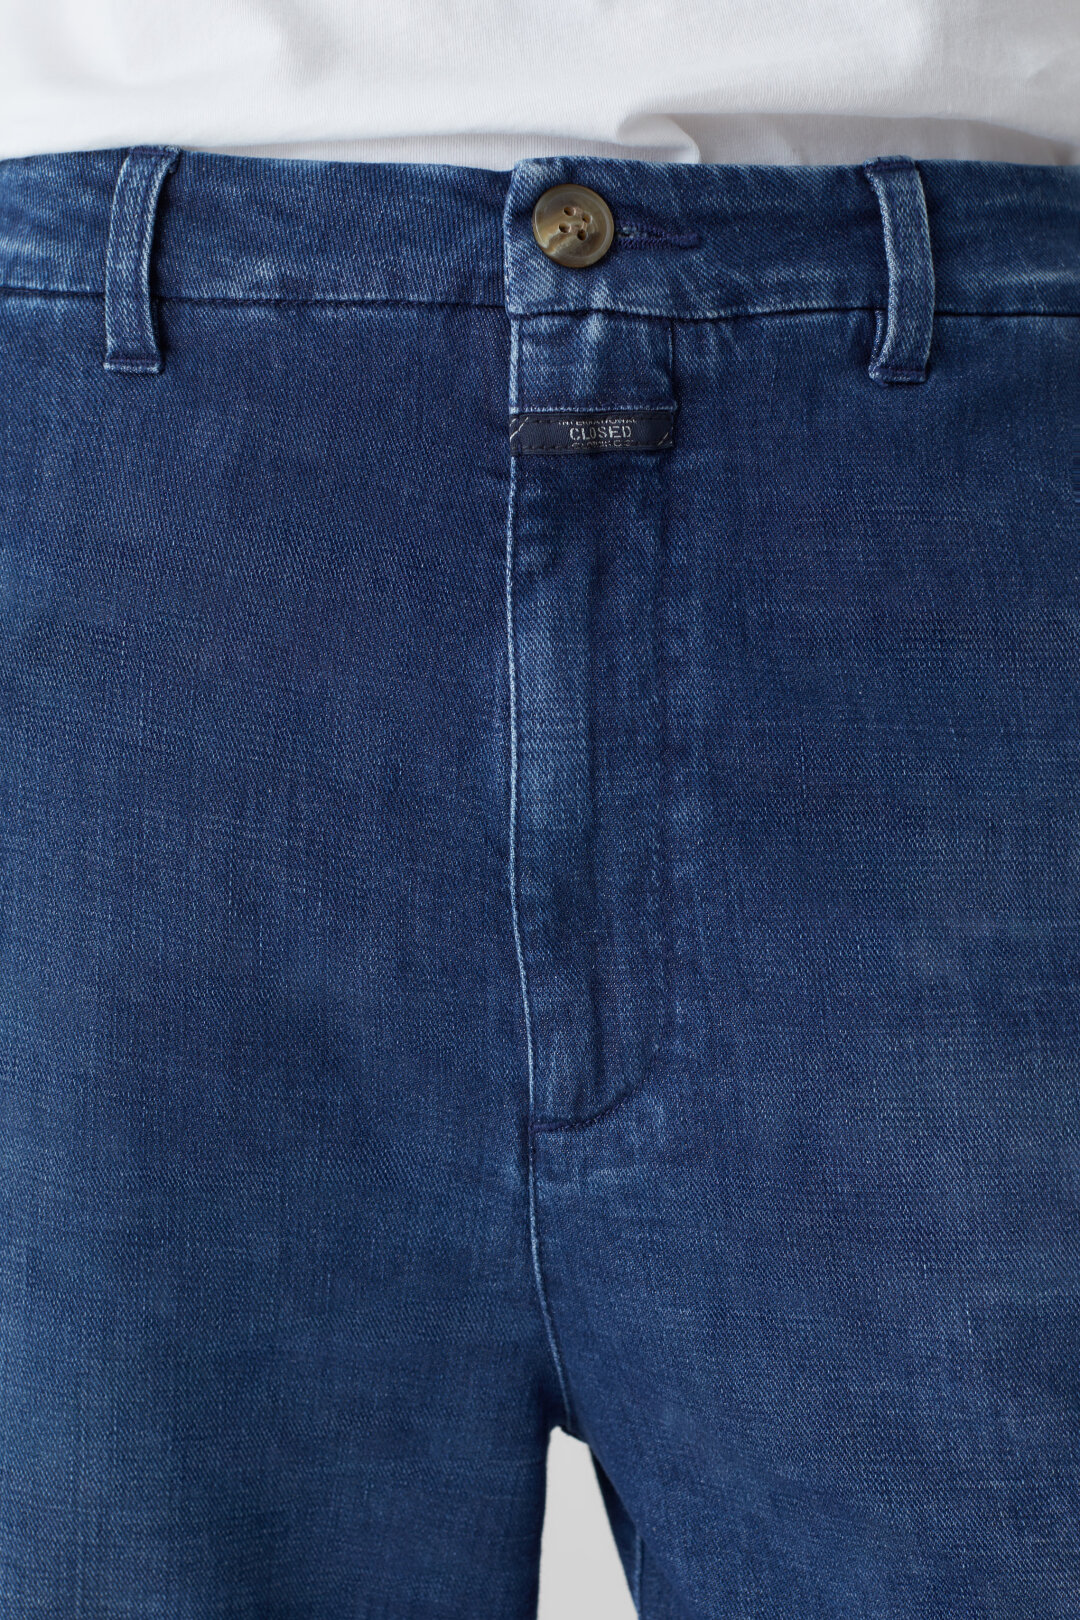 CLOSED Mawbray Jeans in Dark Blue